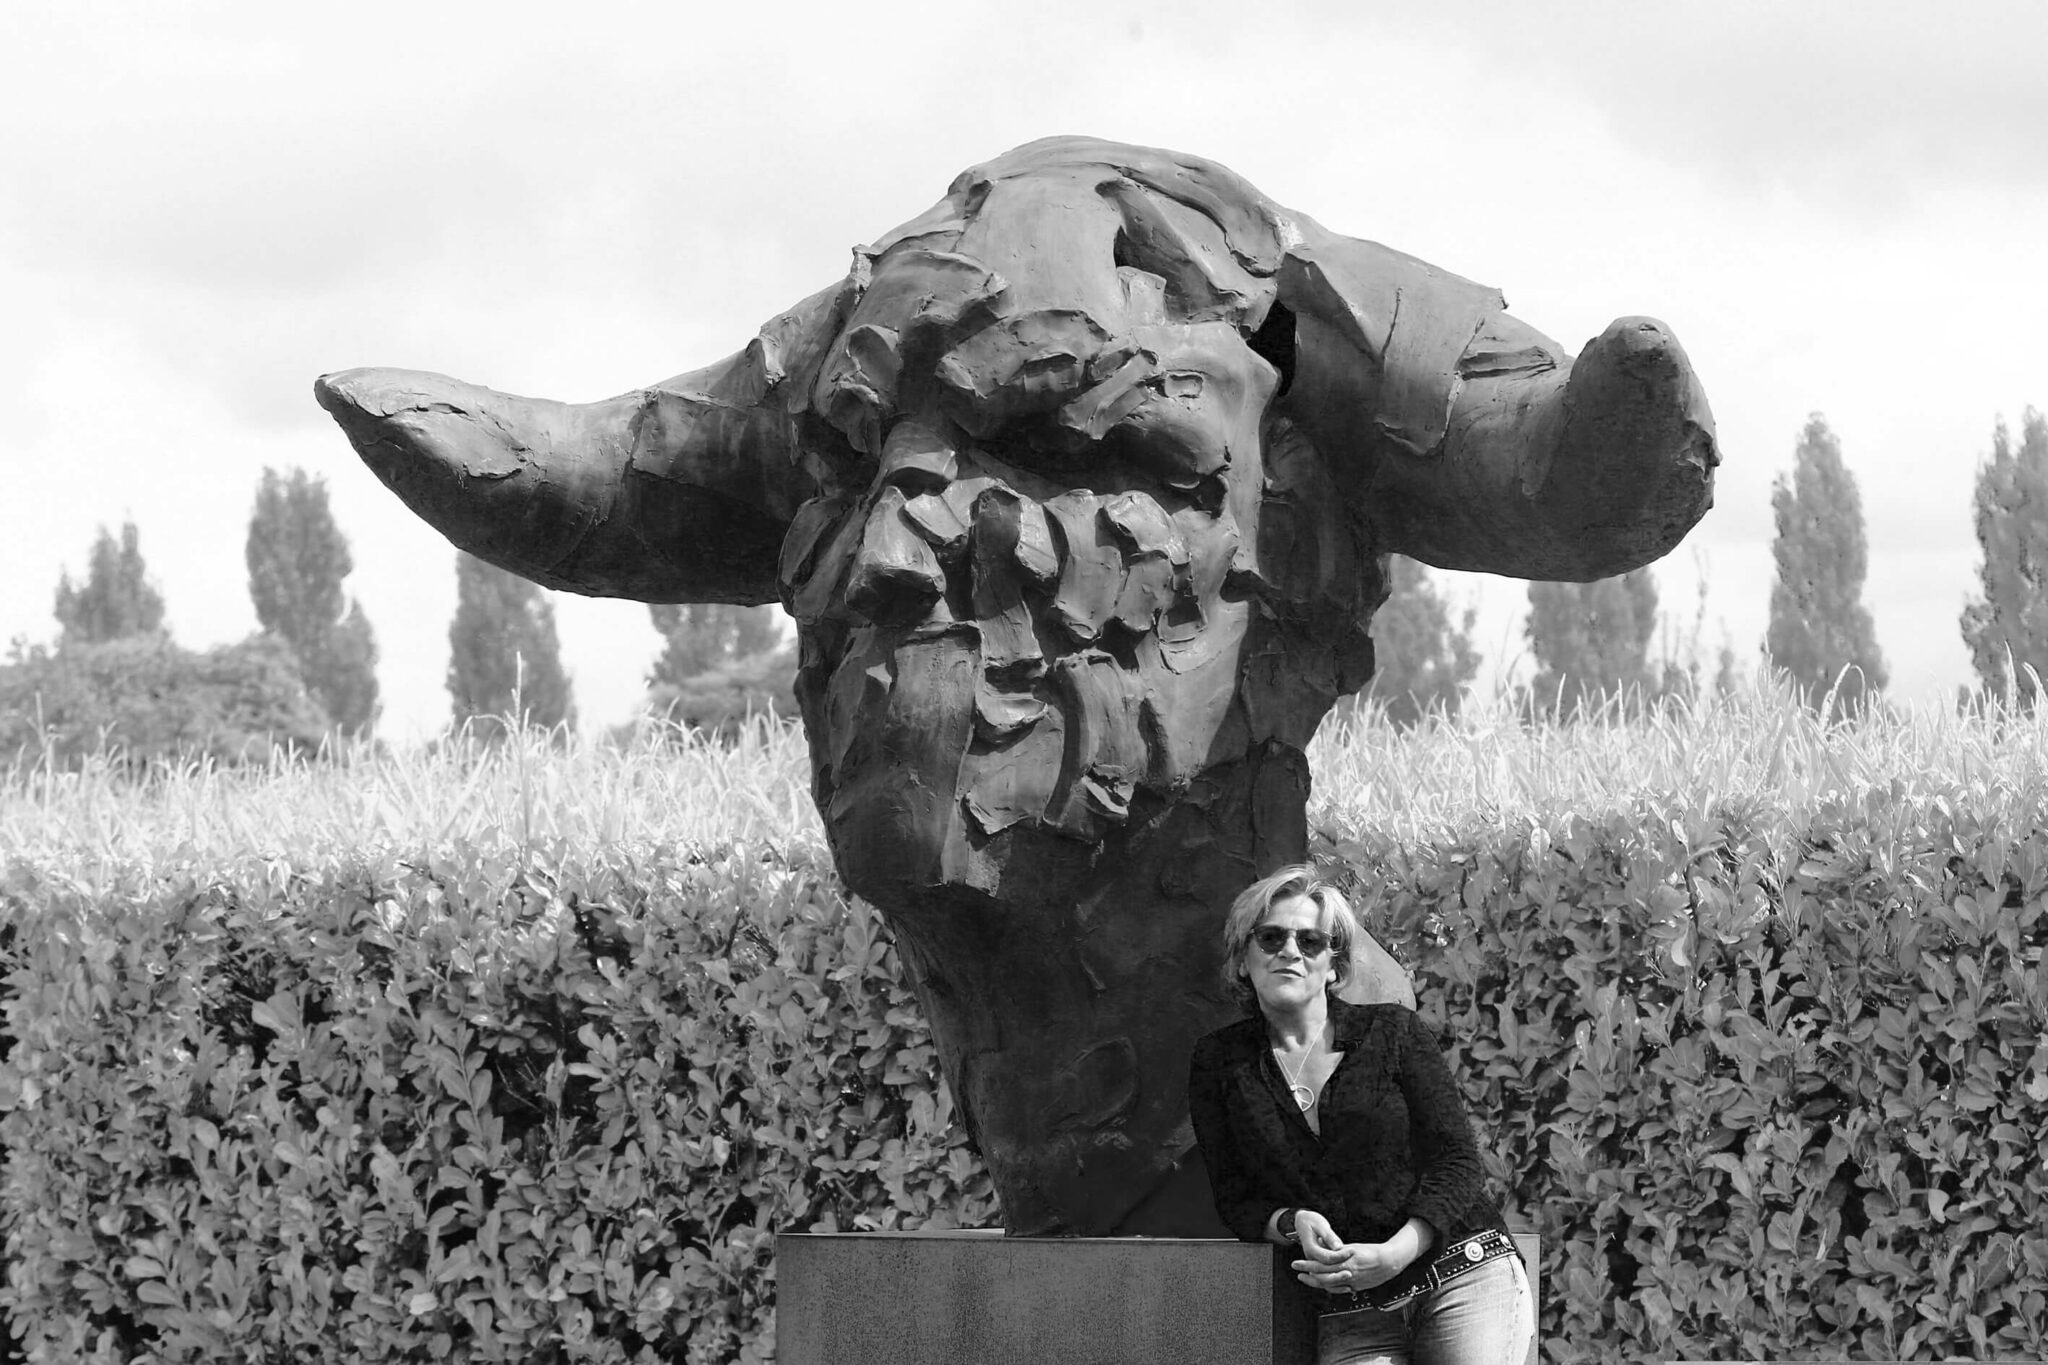 09-catherine thiry morphosis monuental sculpture iron contemporarysculpture art contemporain sculptor belgium